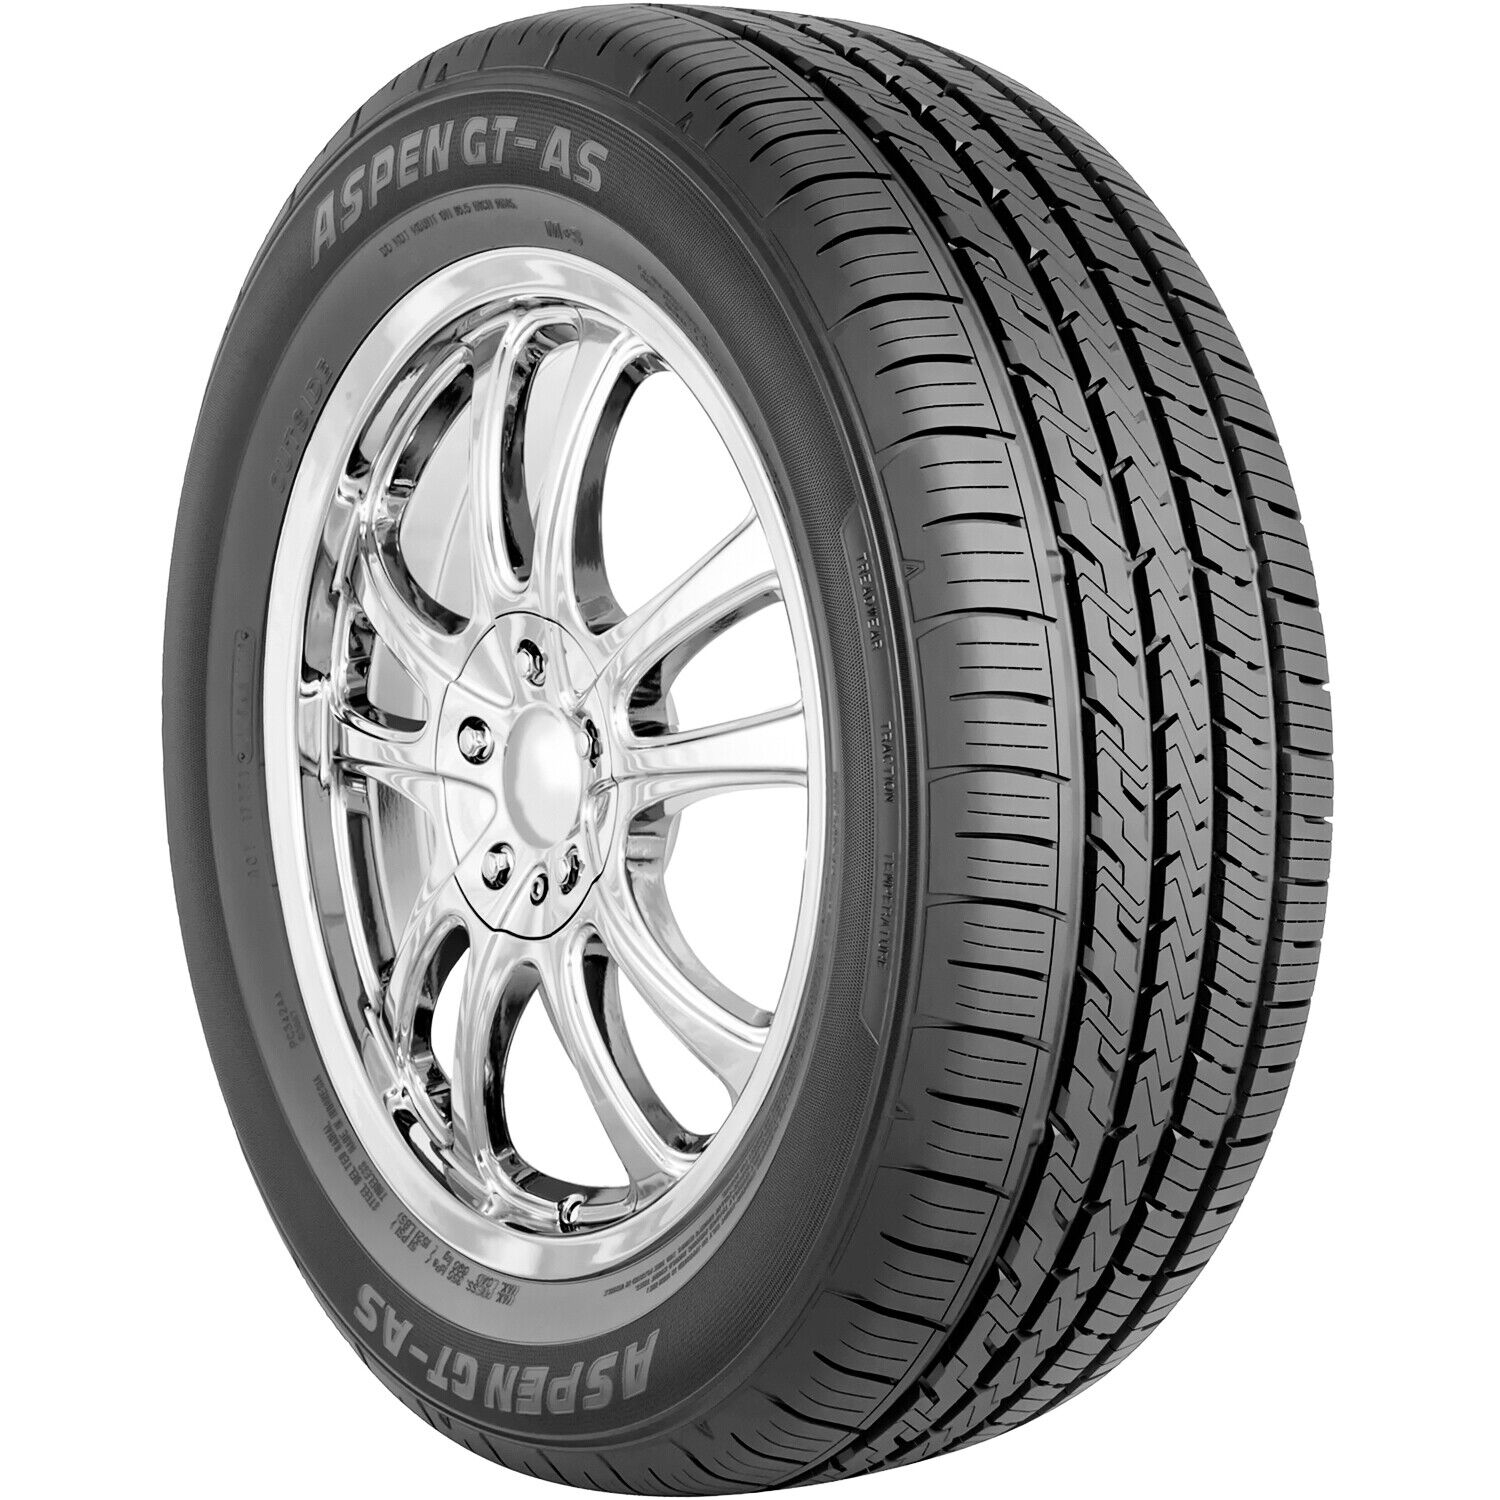 Tire 195/65R15 Aspen GT-AS AS A/S Performance 91H